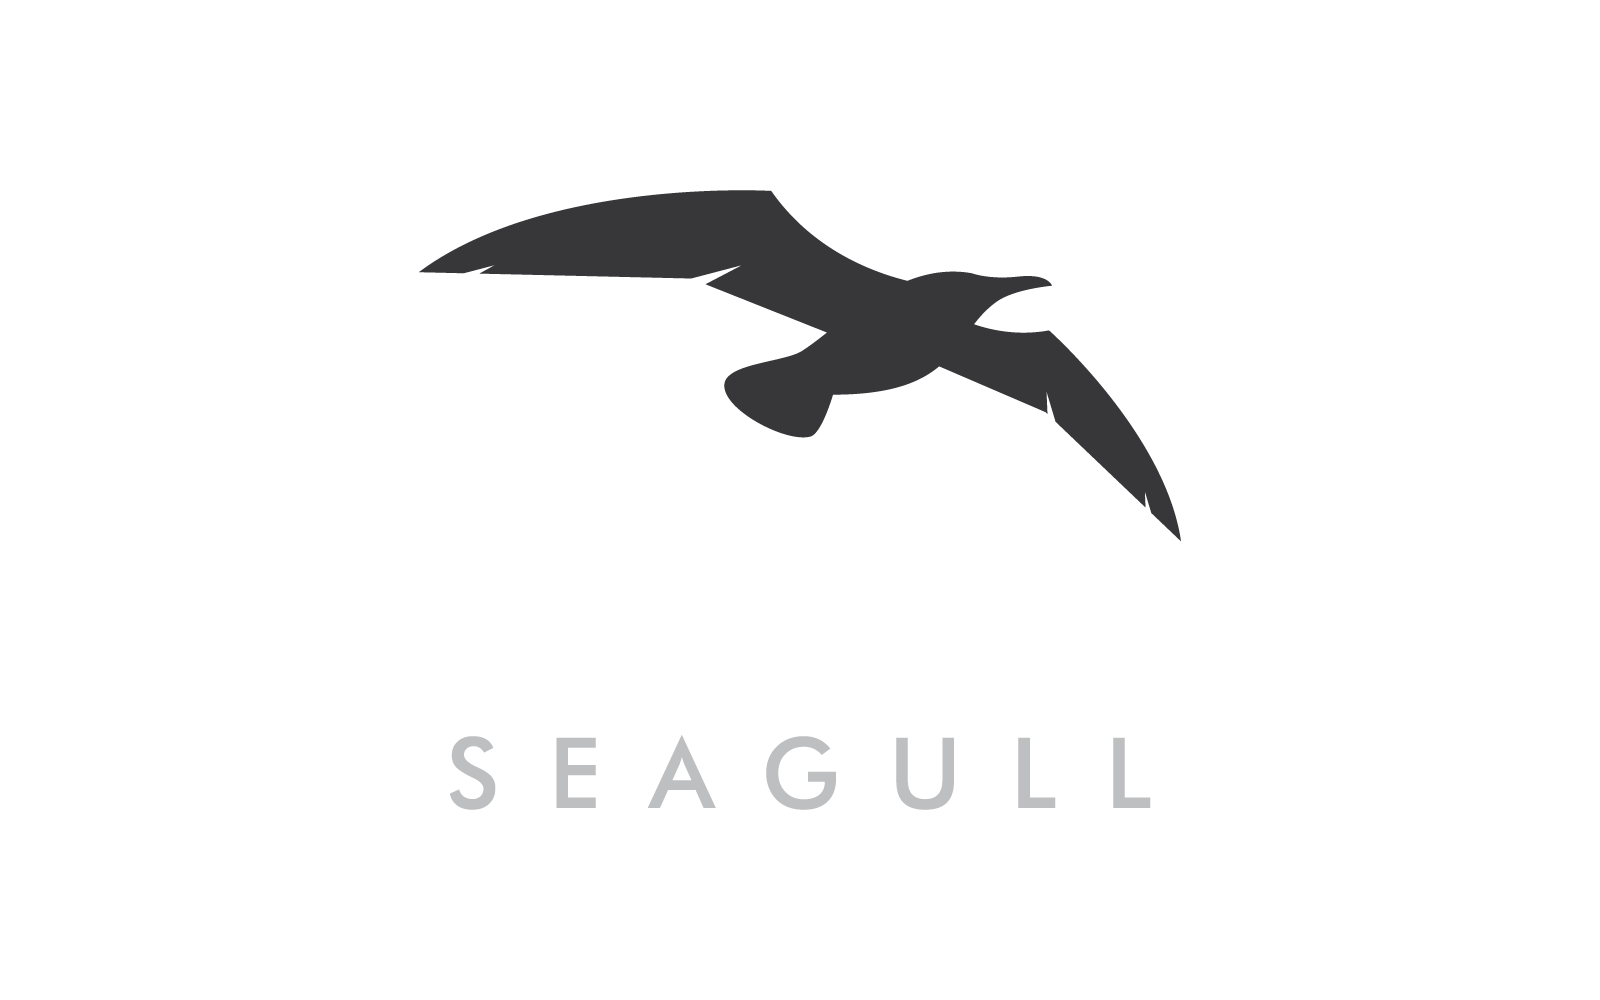 Seagull bird illustration logo vector design eps 10